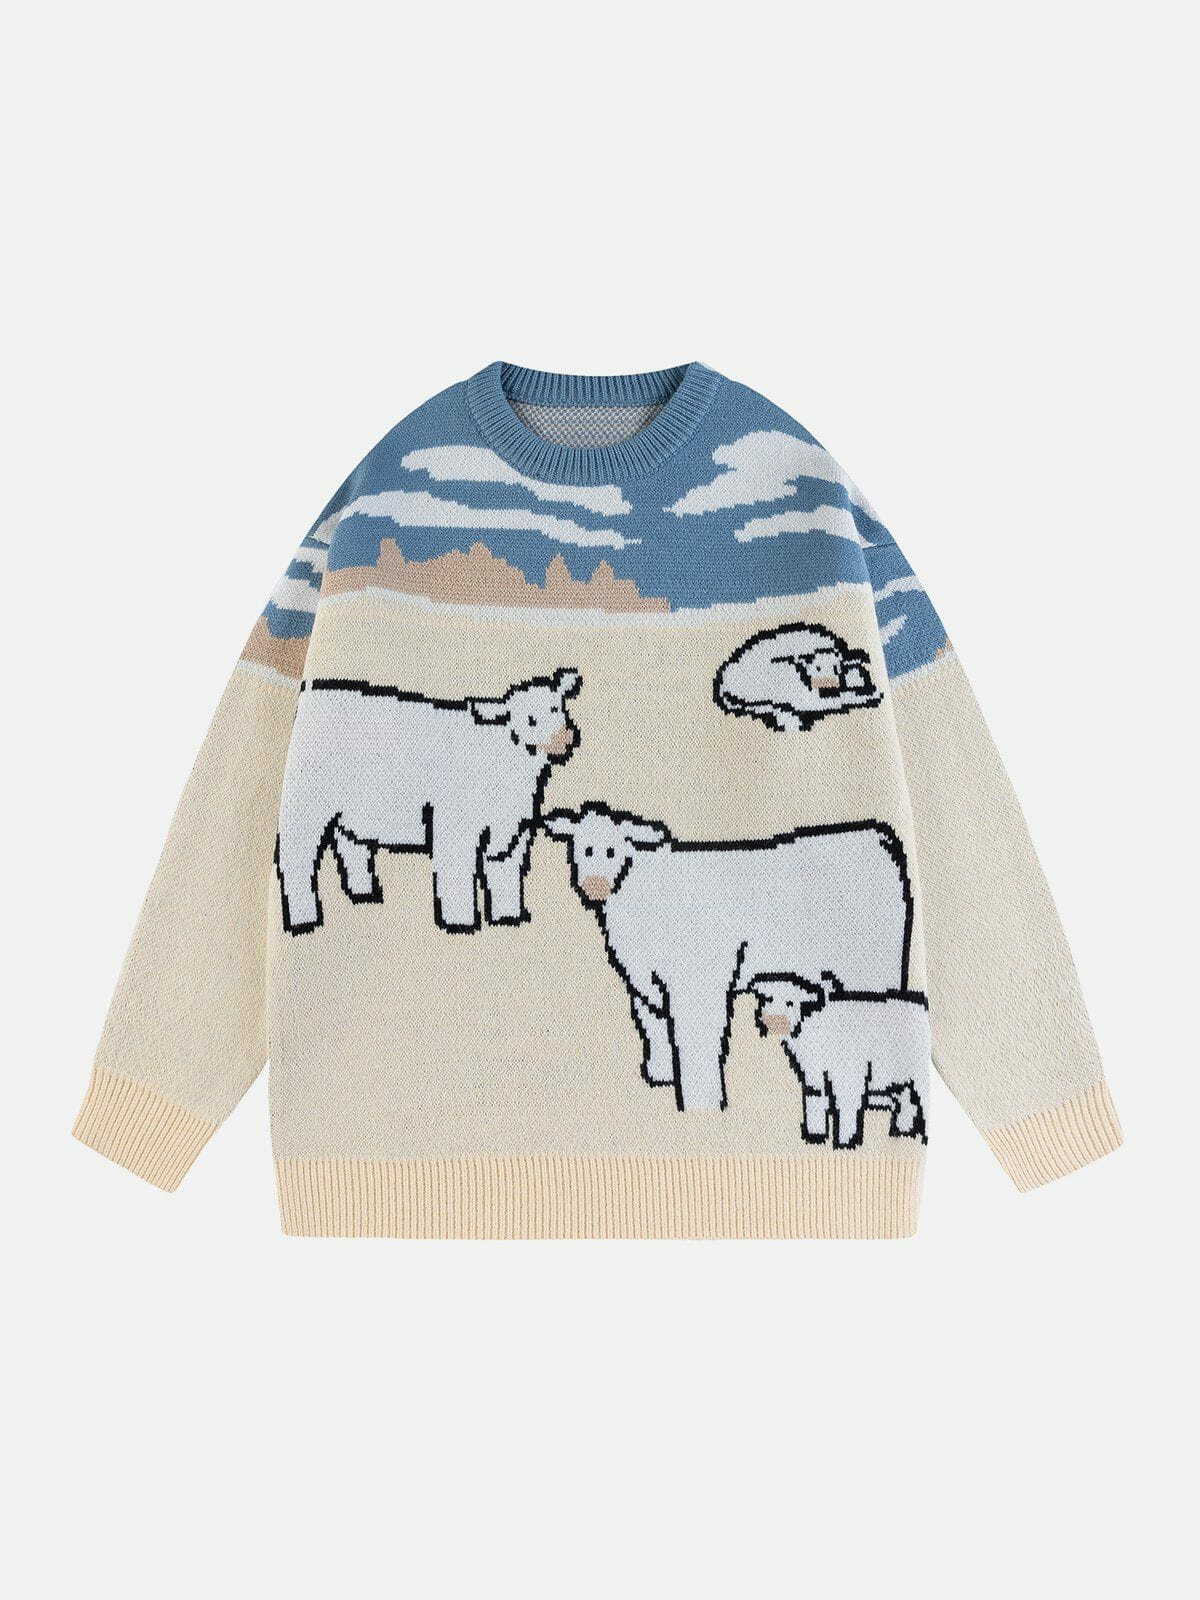 cow jacquard sweater colorblocked urban edge 7247